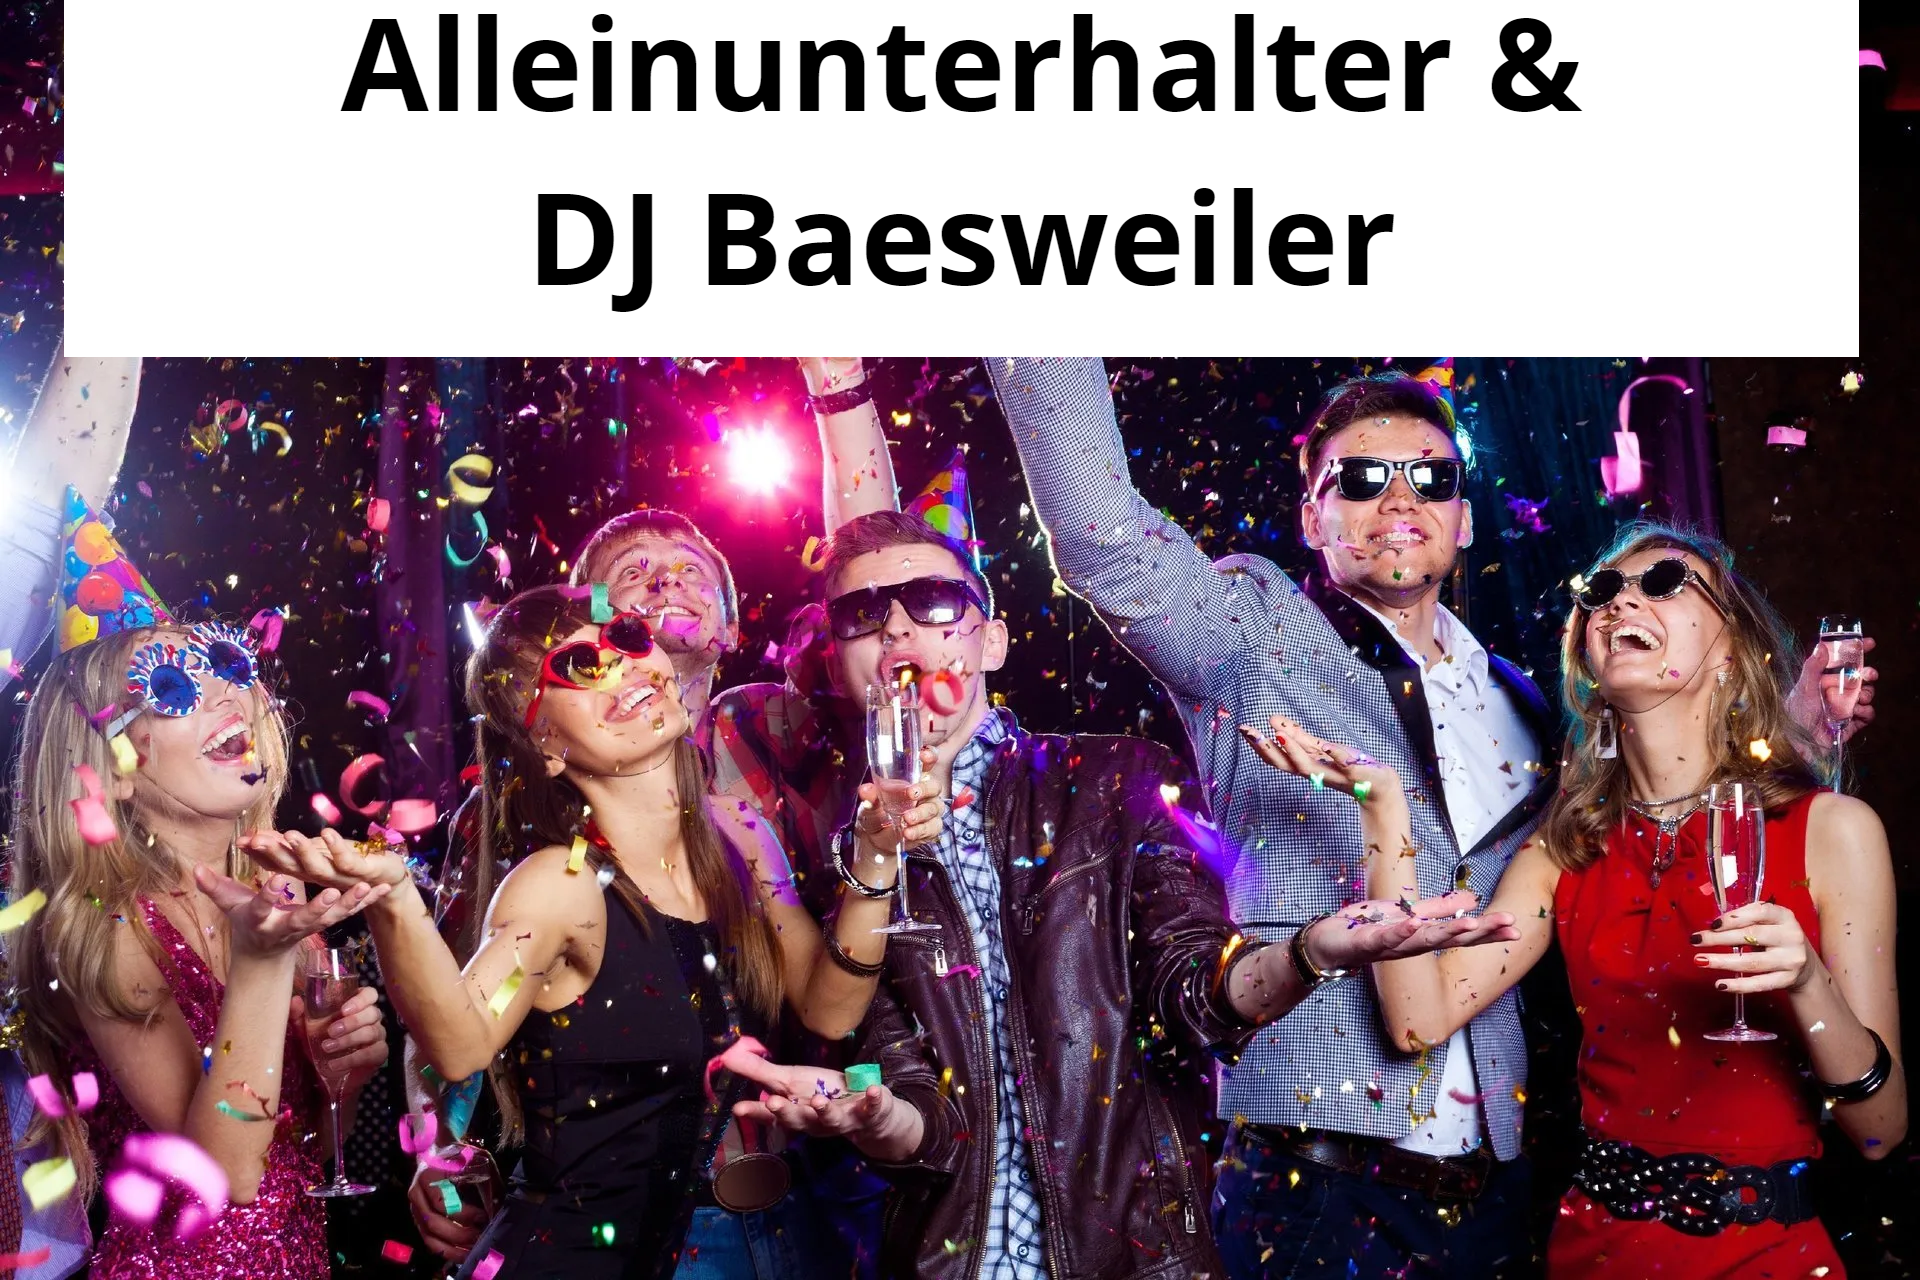 Alleinunterhalter & DJ Baesweiler